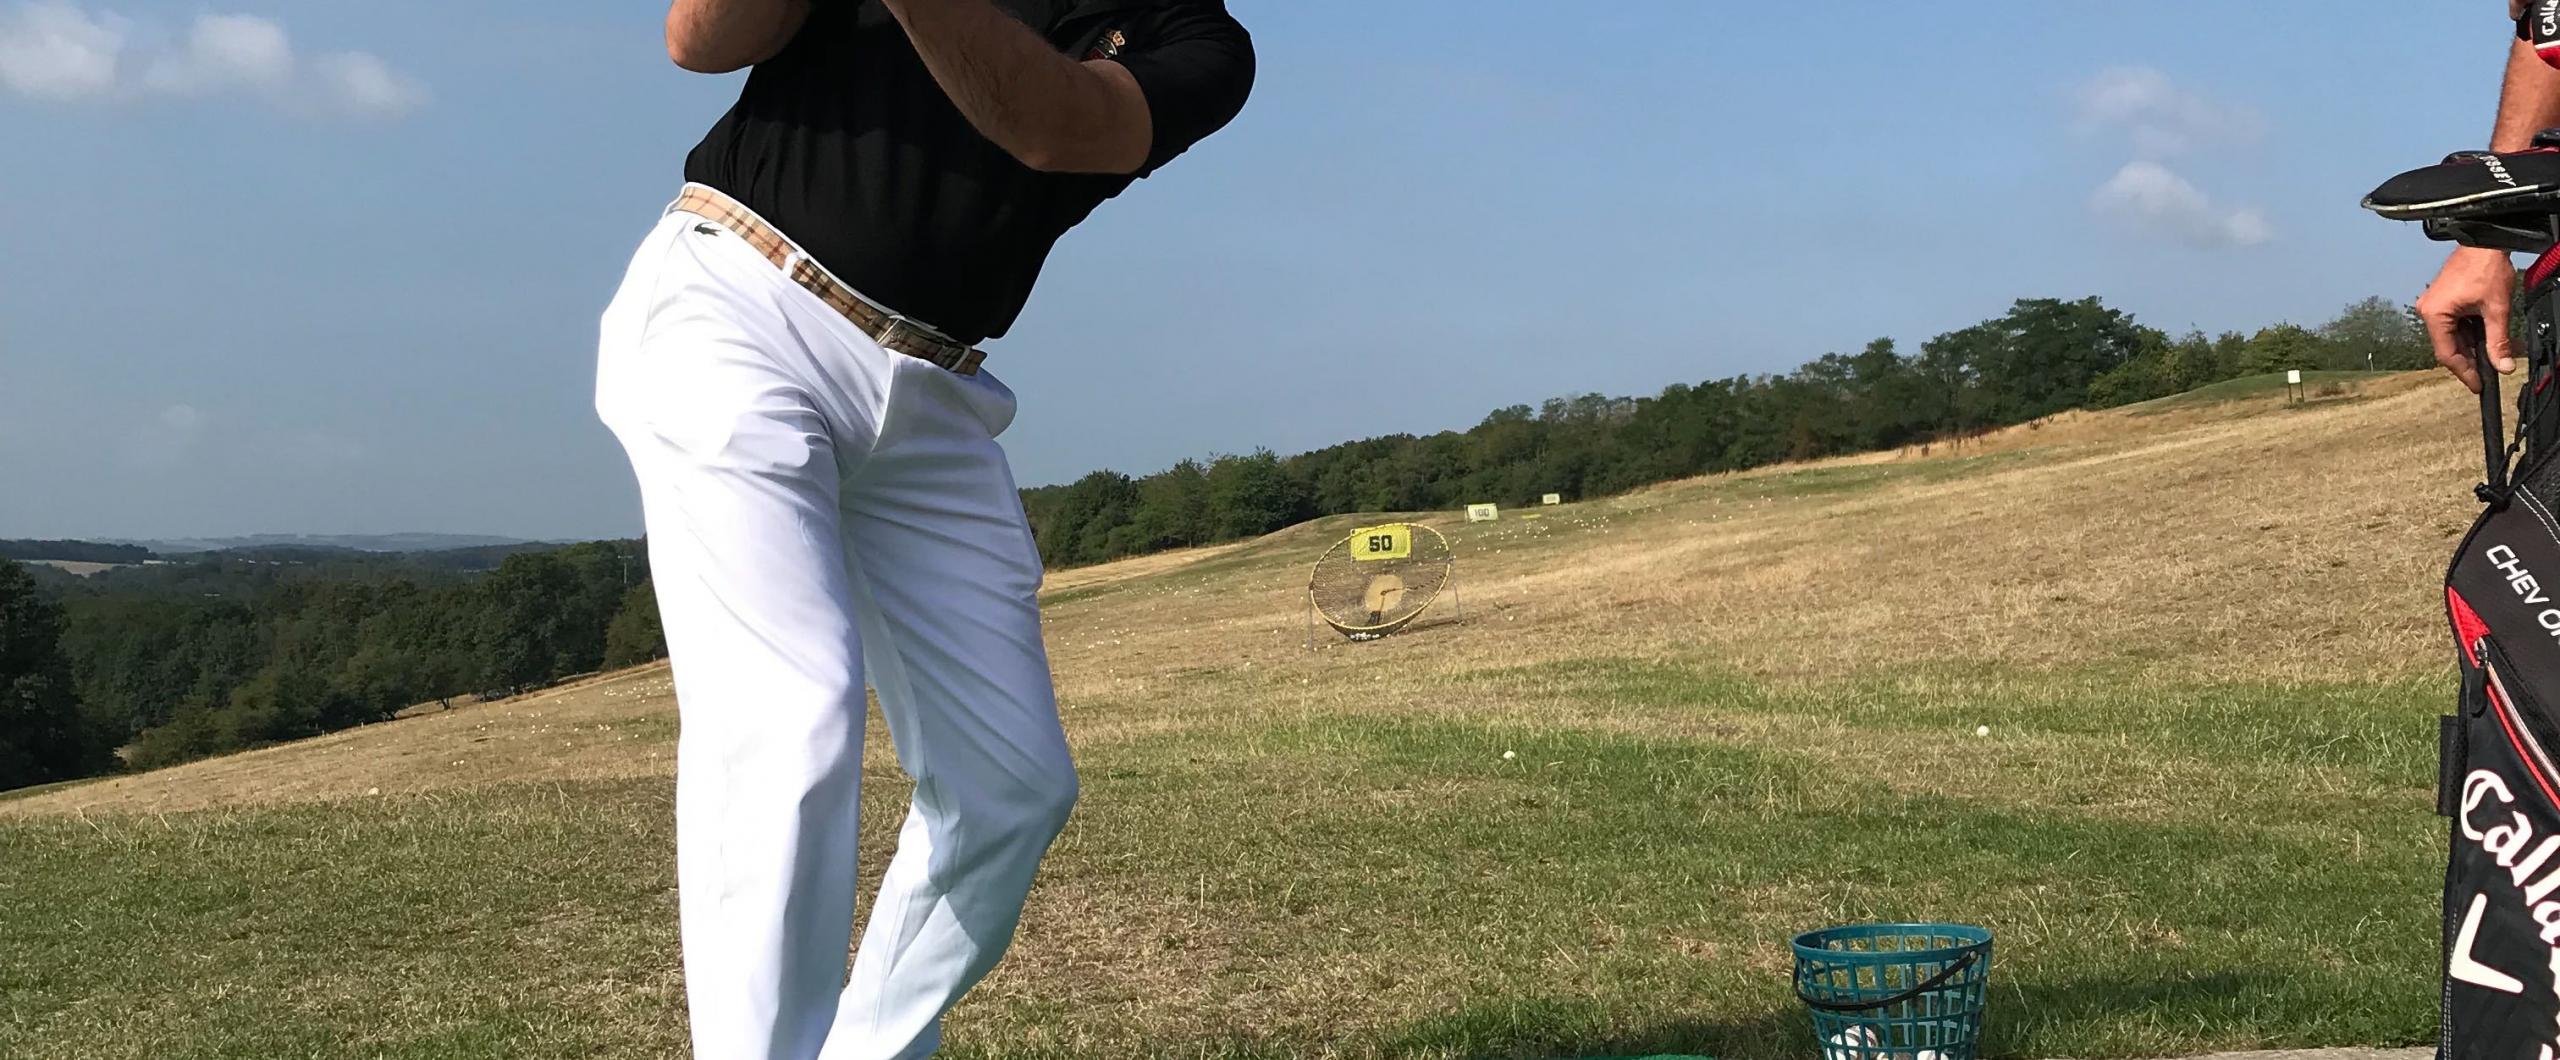 Practice golf homme seul